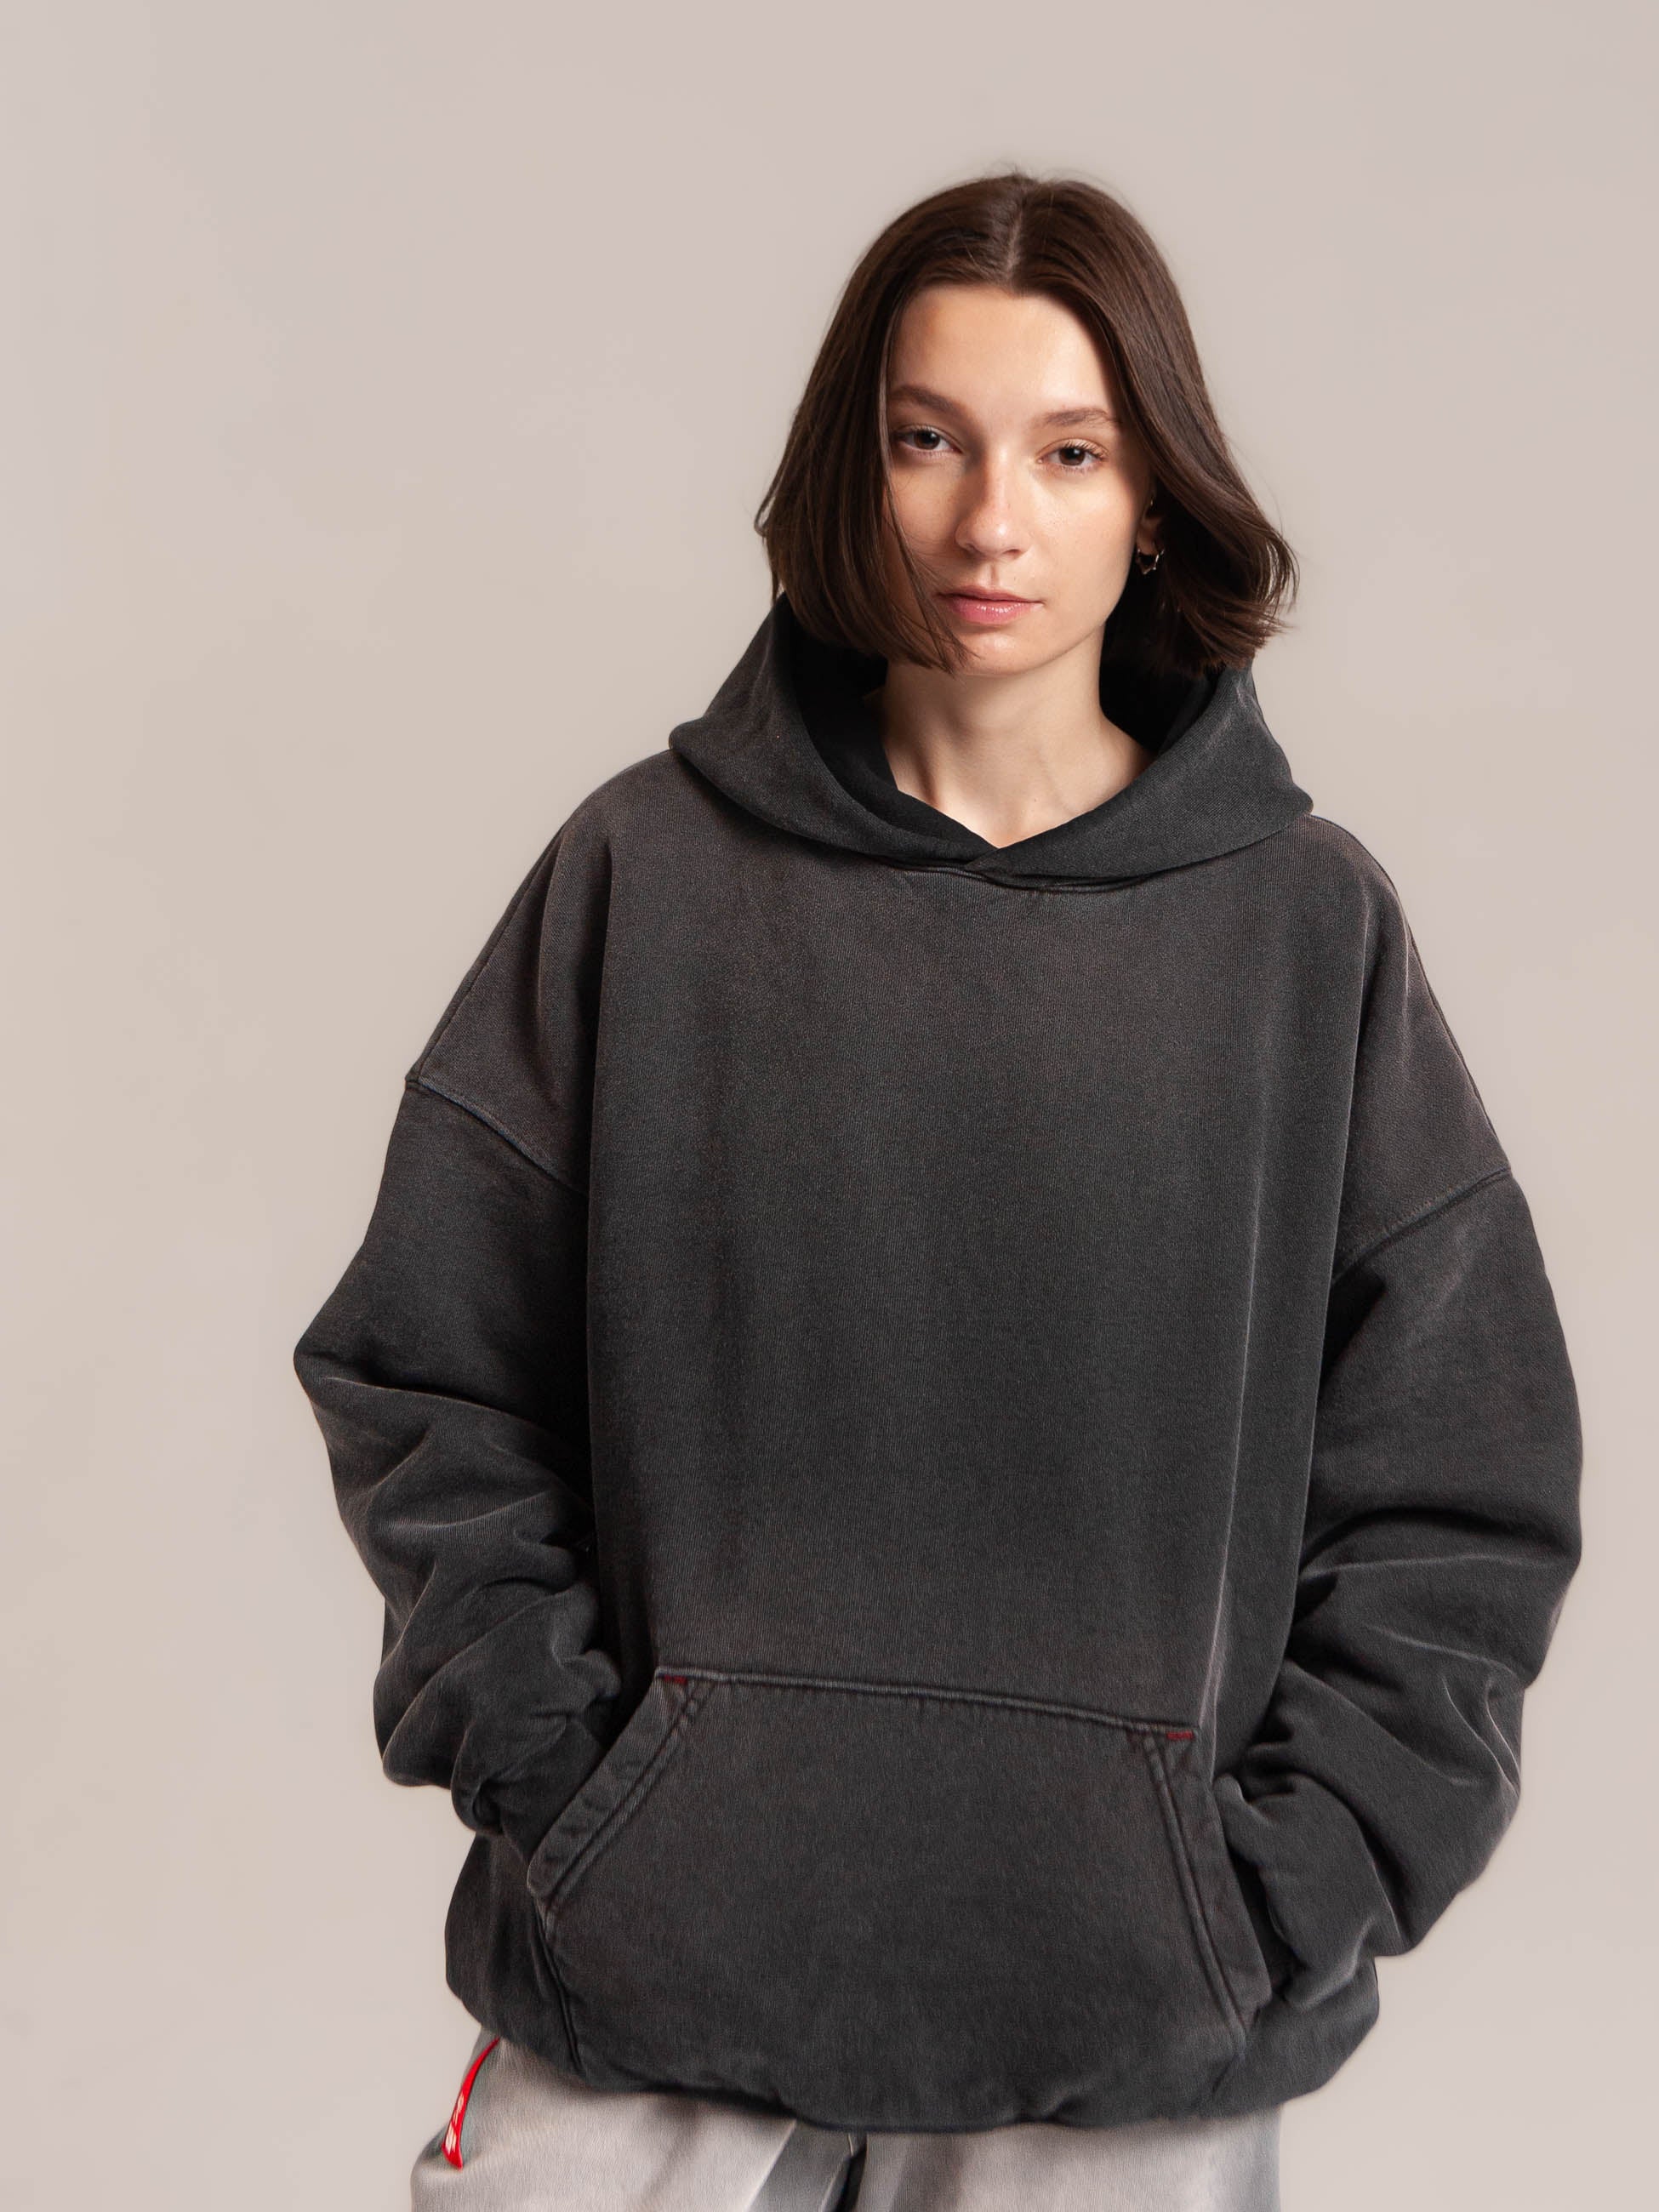 Publik Brand Double Layered Fleece Black Hoodie with Female Model Double Layered Fleece Black Hoodie Flat Luxury Made in USA